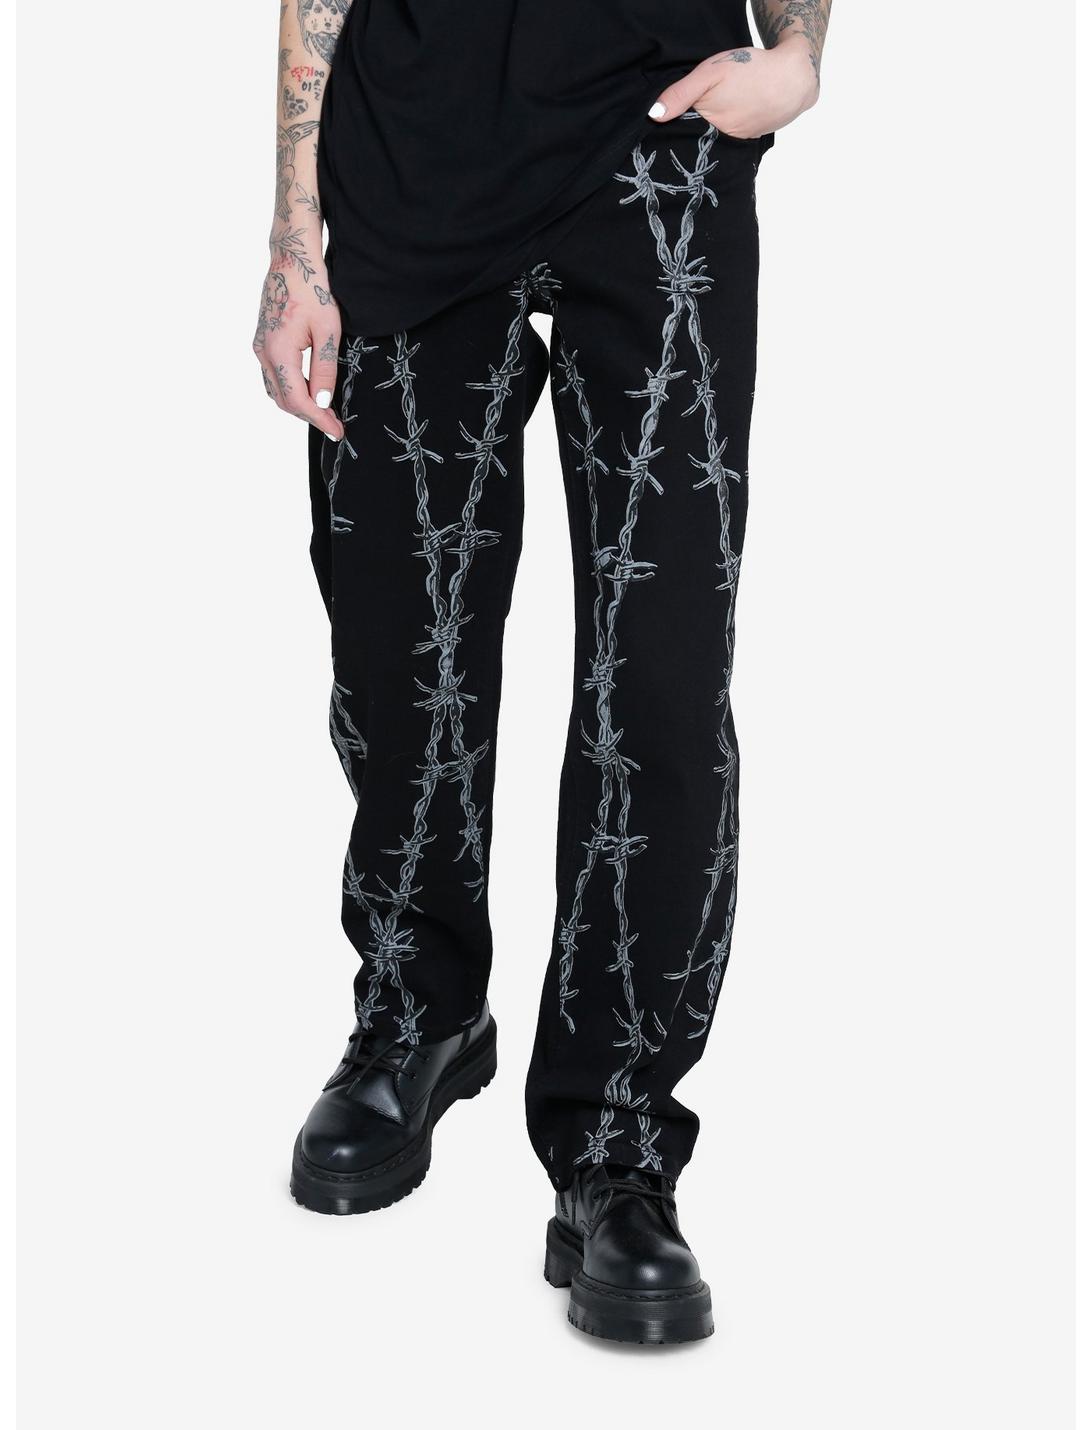 Black & Grey Barbed Wire Loose-Fit Jeans, GREY, hi-res